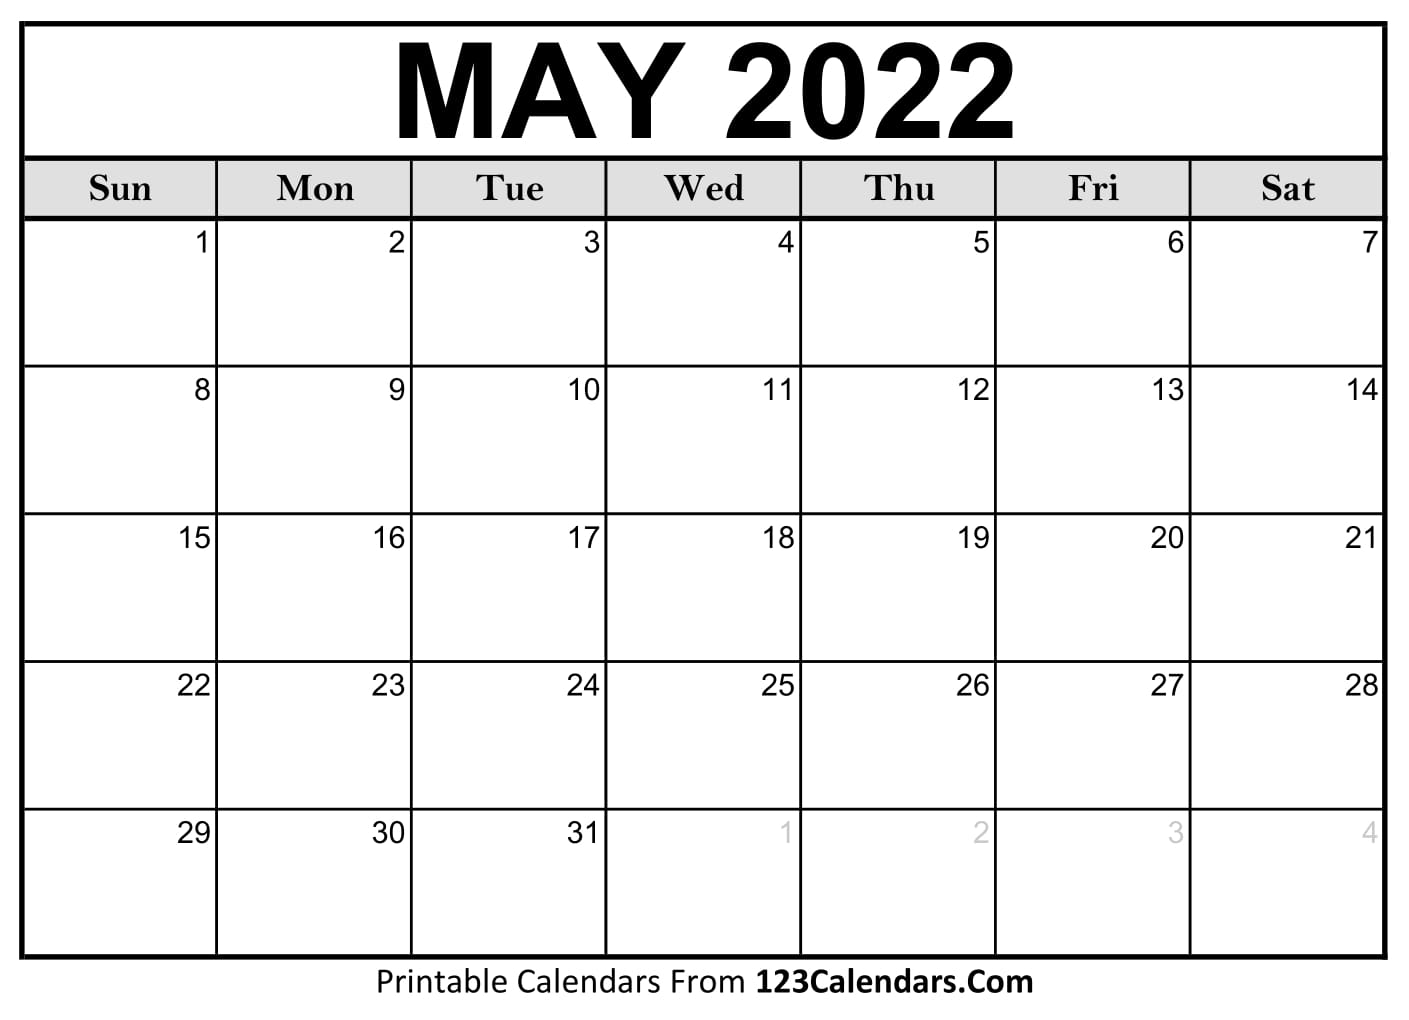 May 2022 Calendar Images Printable May 2022 Calendar Templates - 123Calendars.com